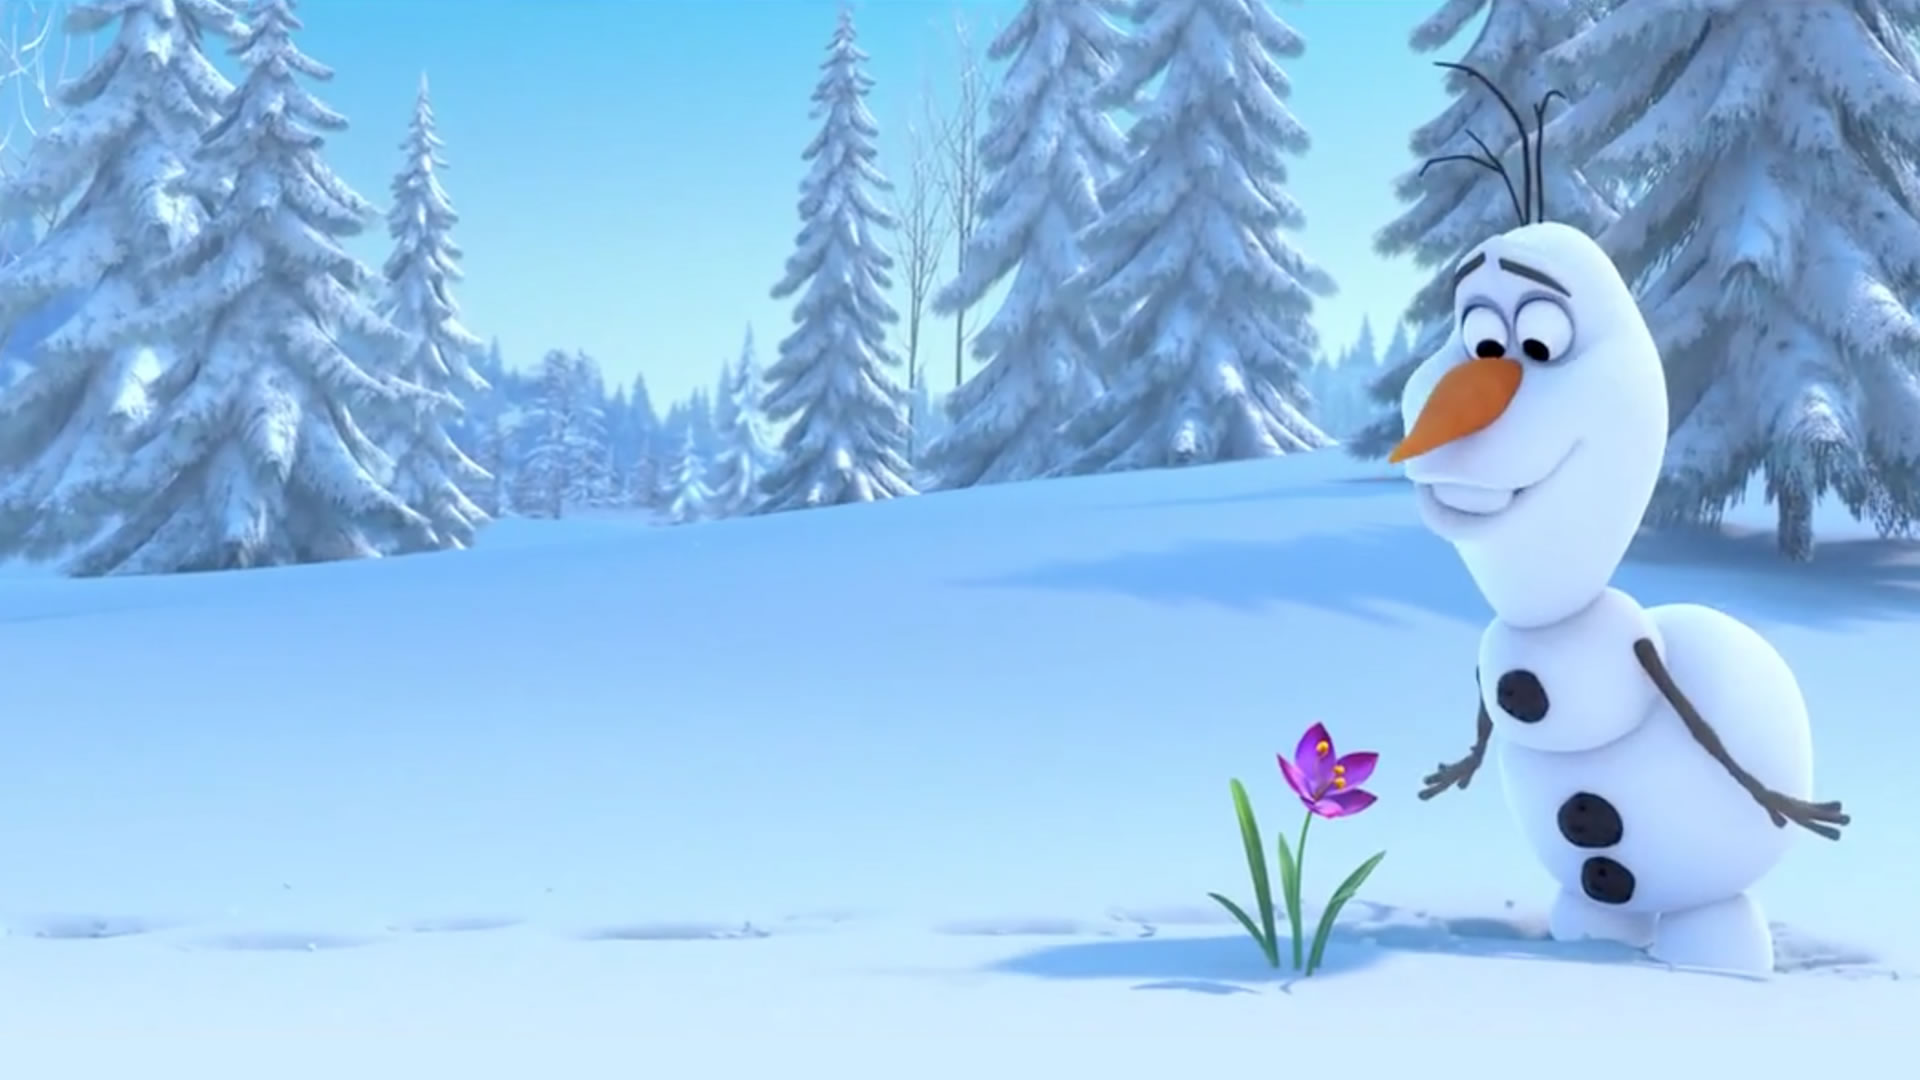 download wallpaper: Frozen – Olaf de sneeuwman wallpaper